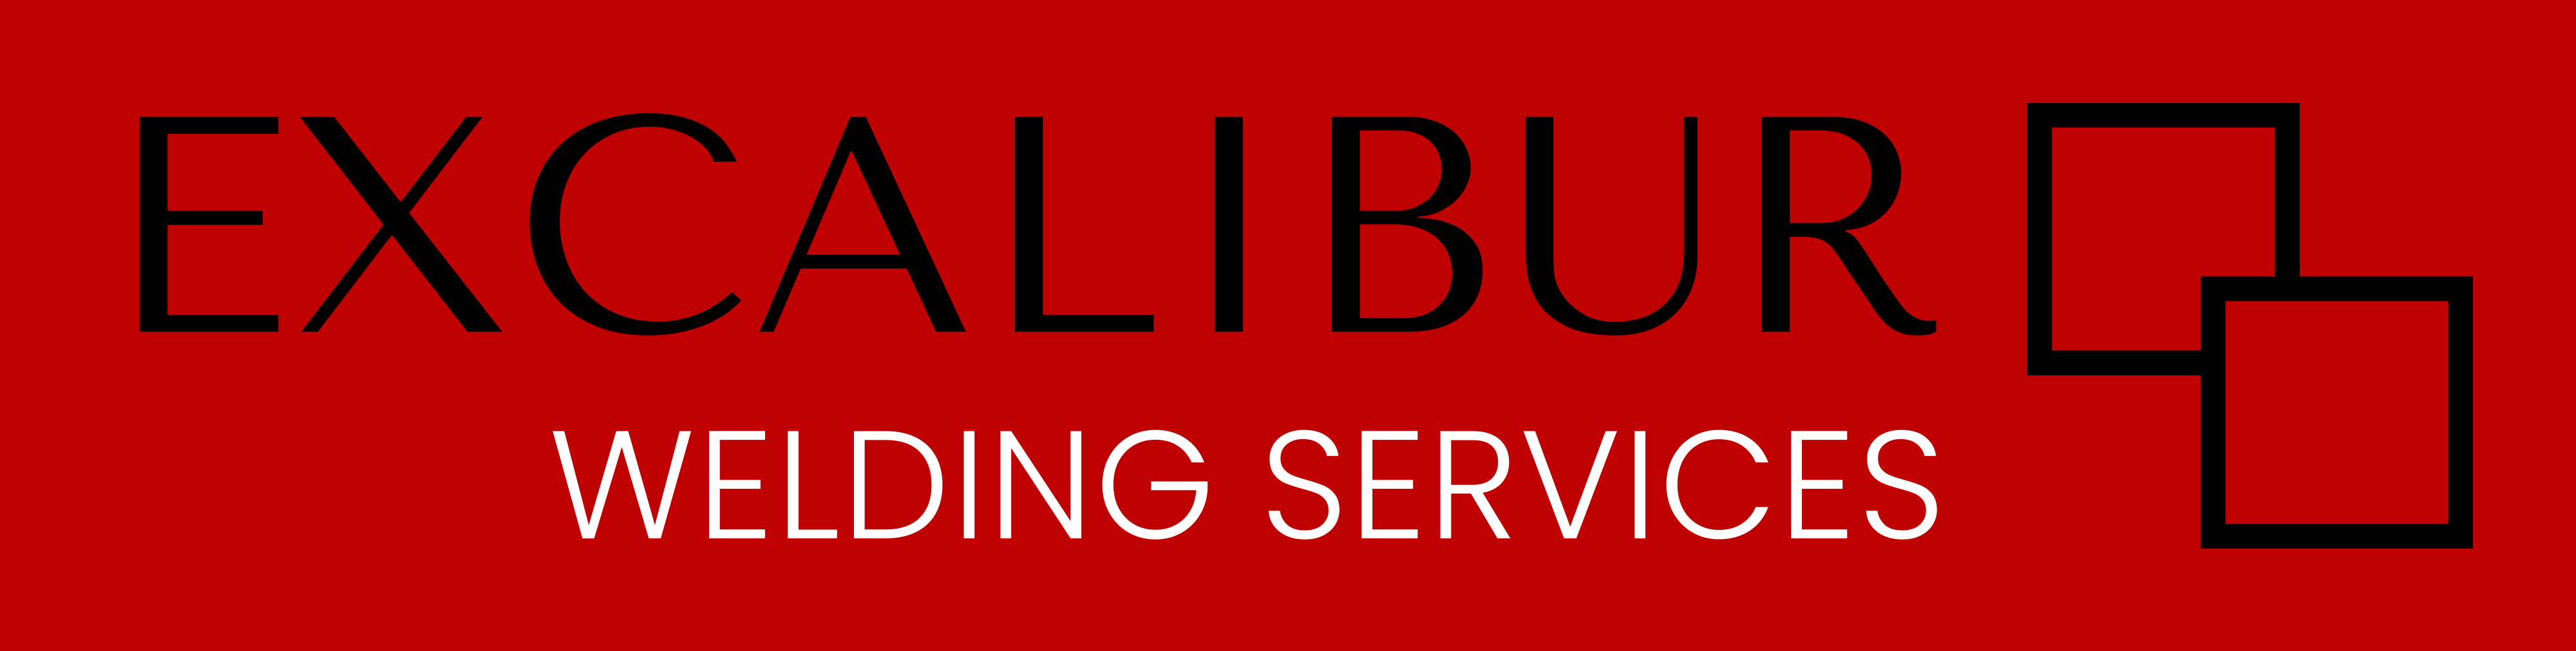 Excalibur Welding Services Logo